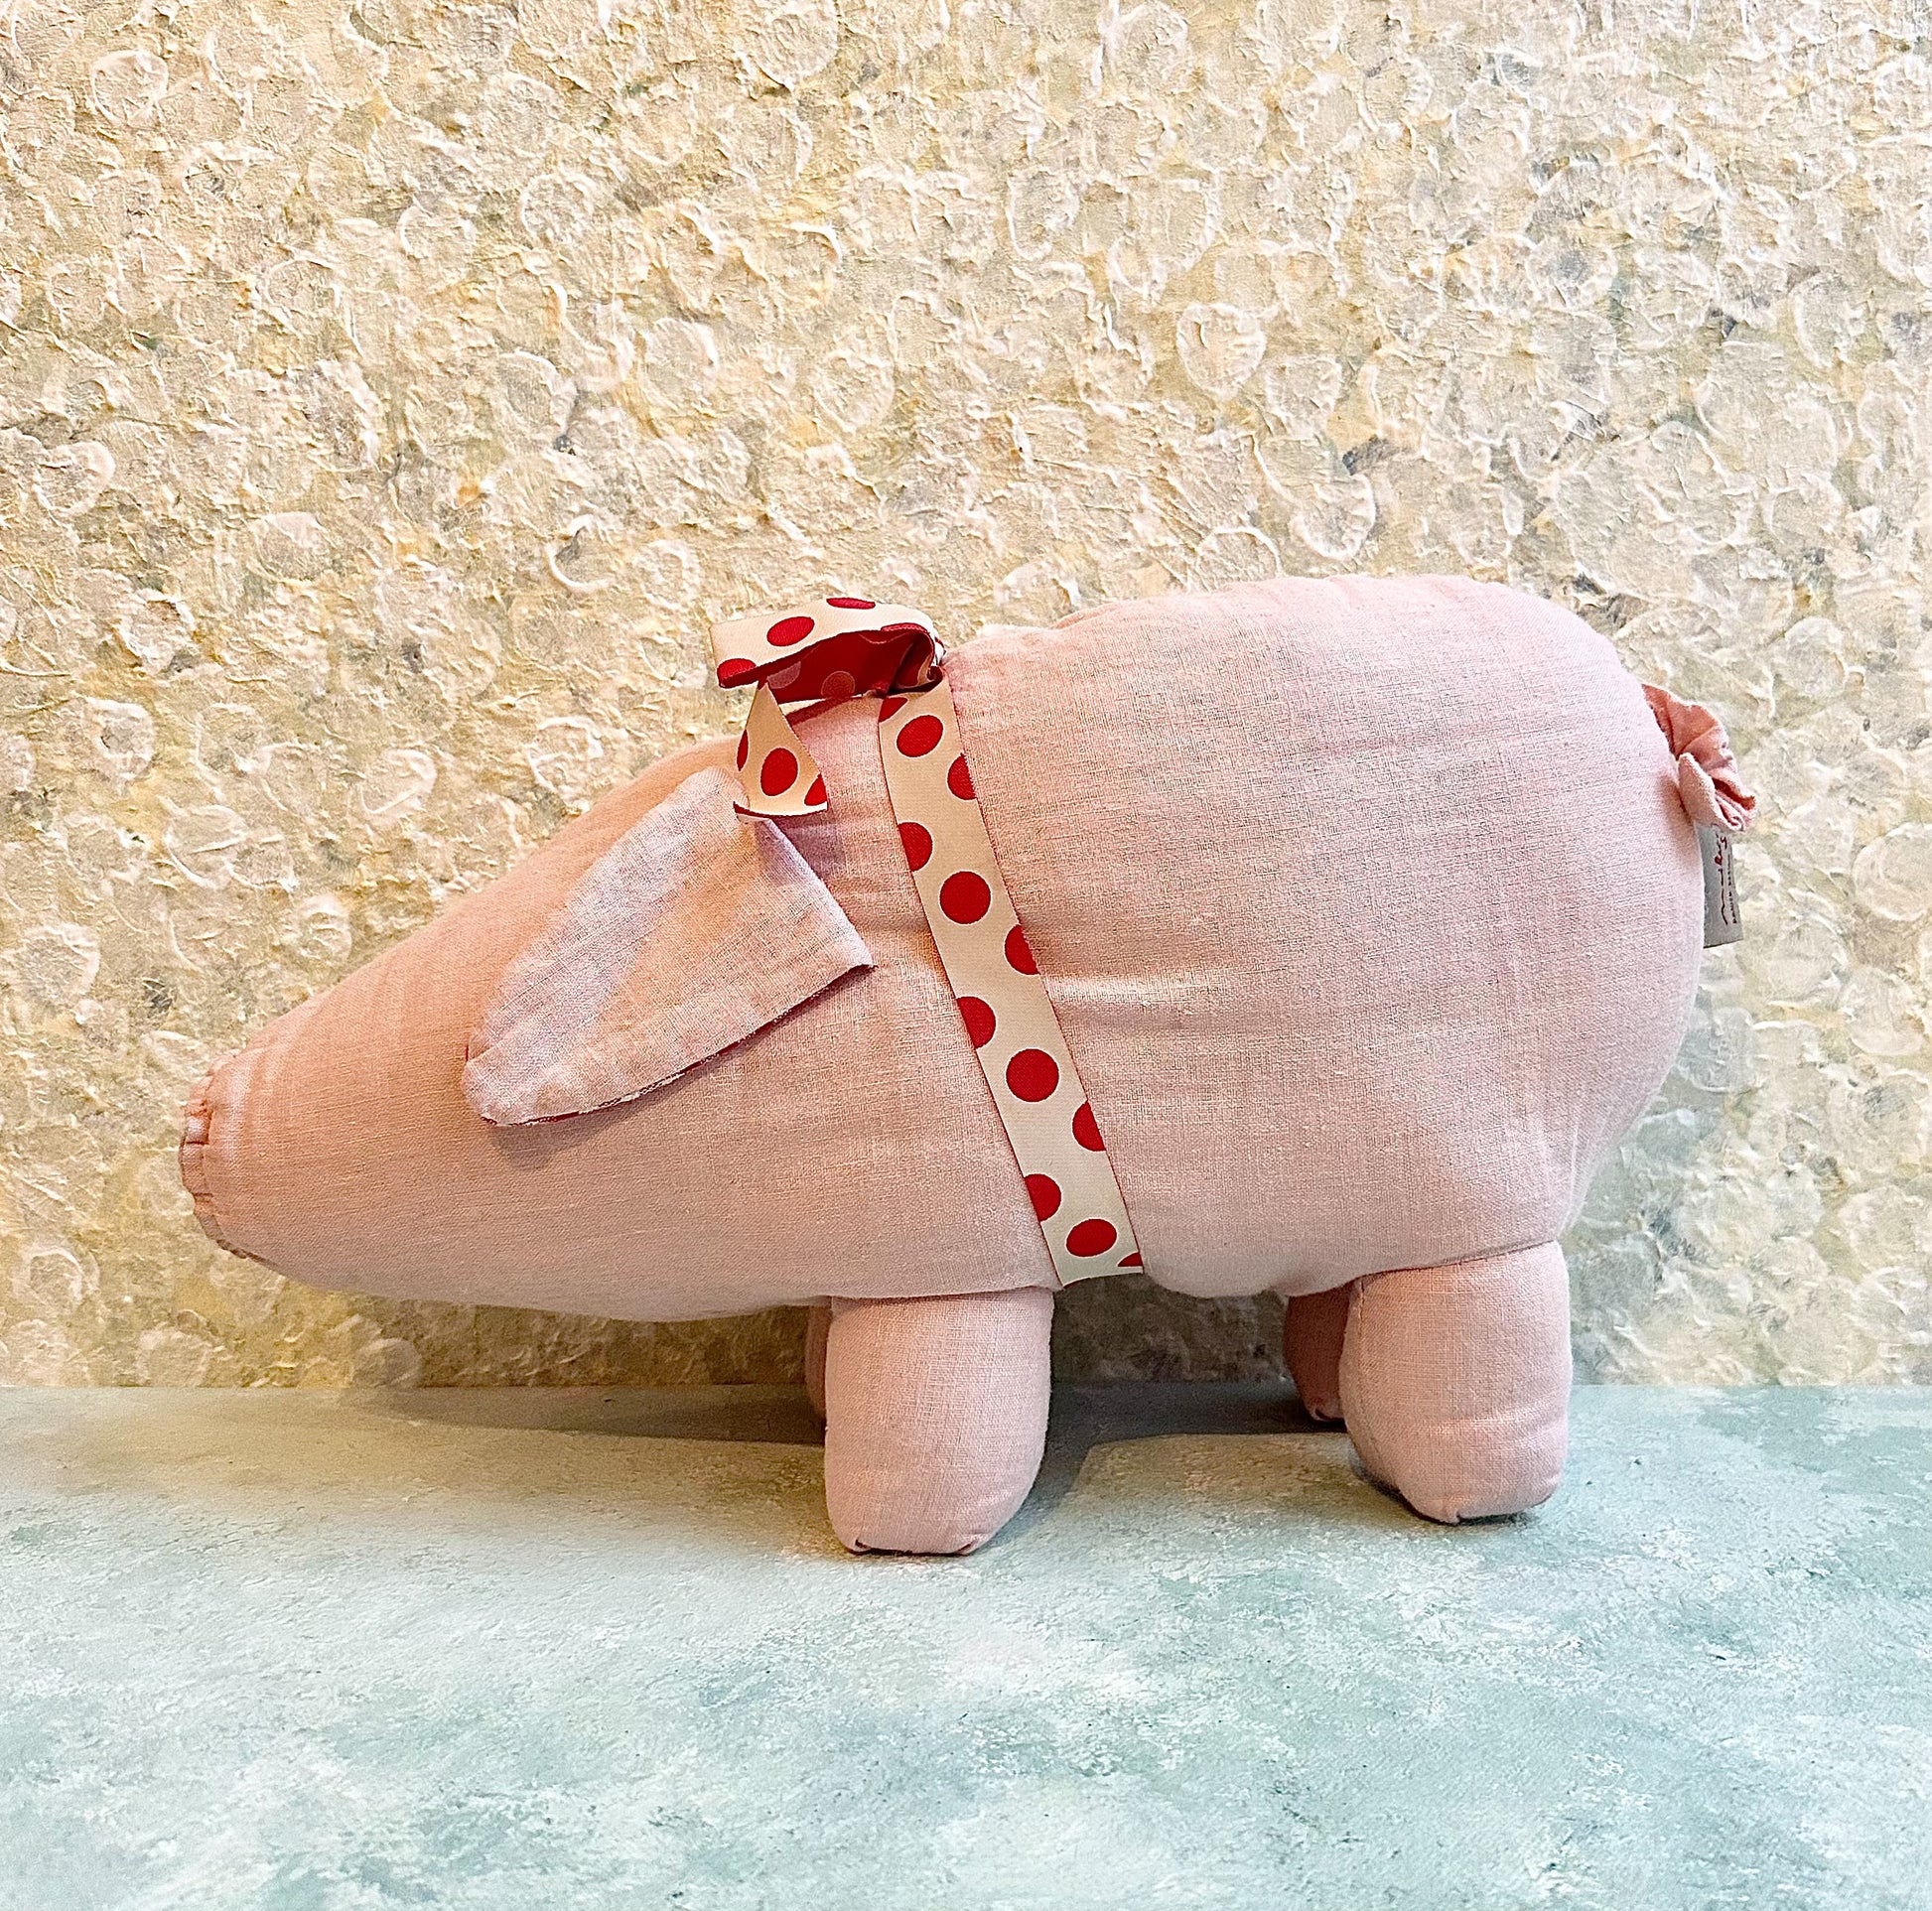 Large Pig - 2009